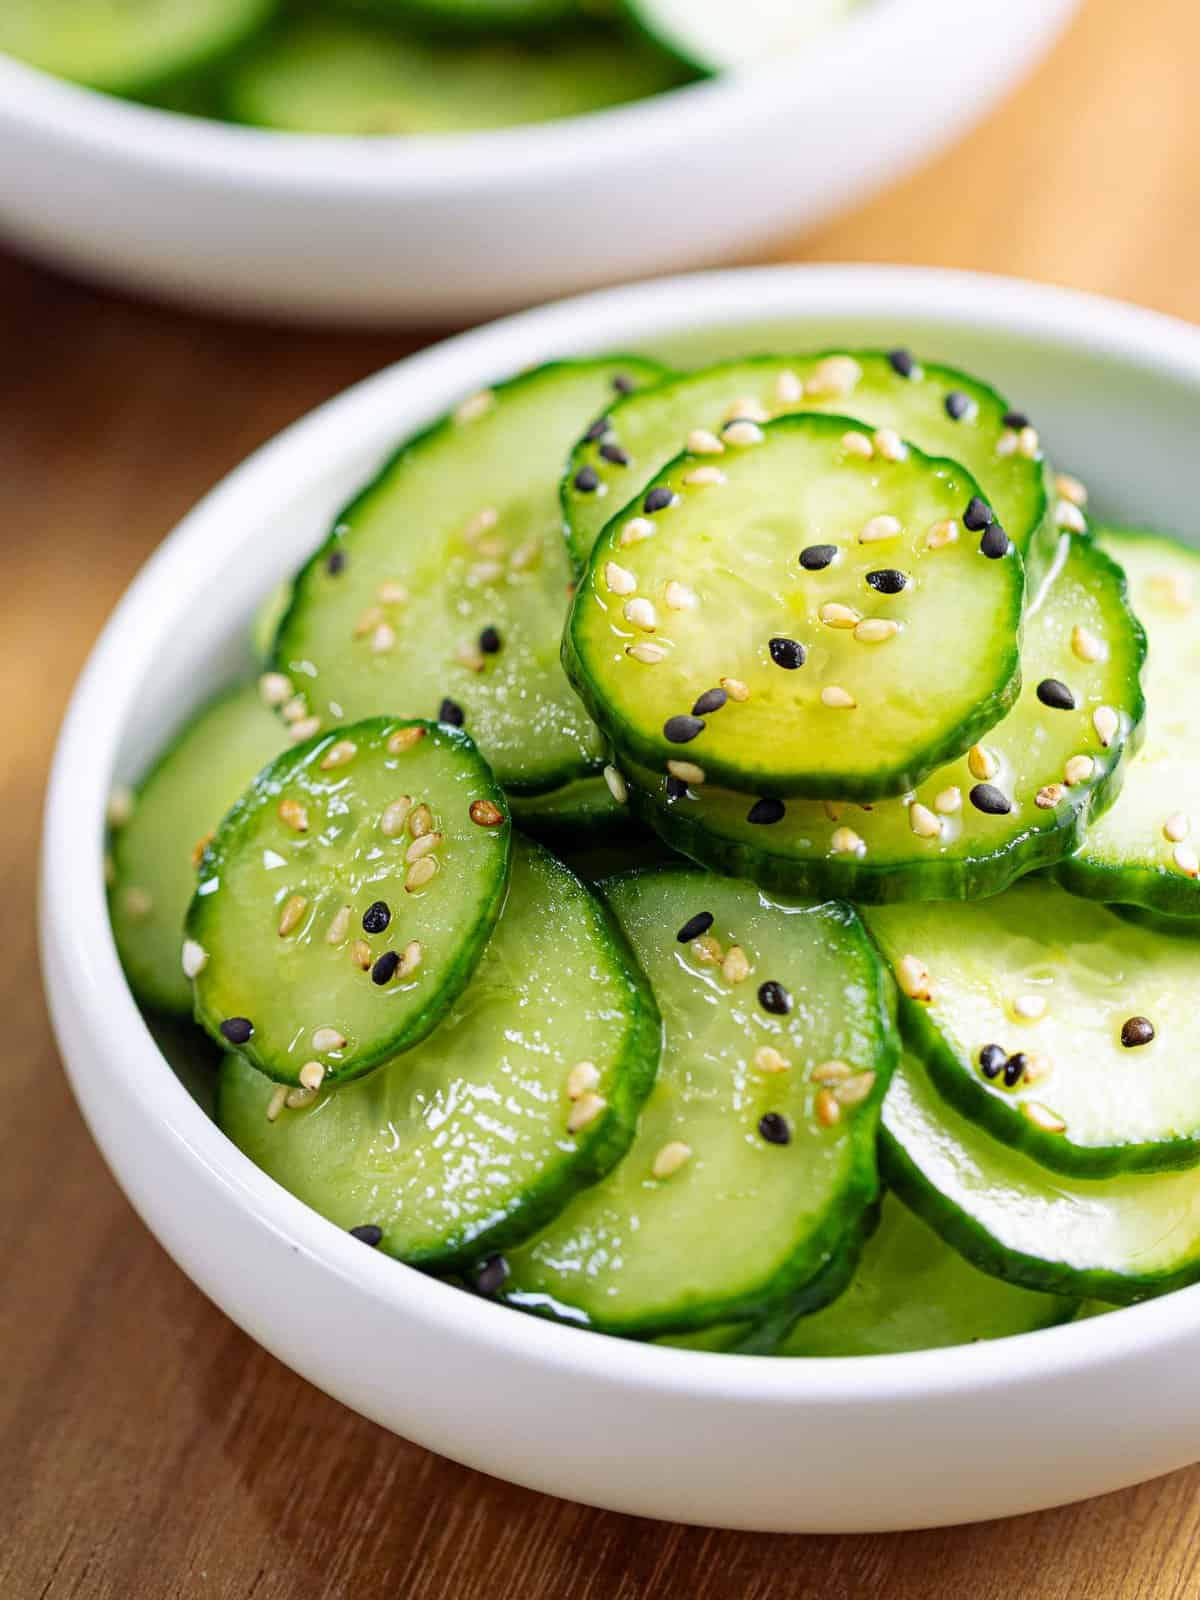 Sunomono or Japanese cucumber salad in a white bowl.